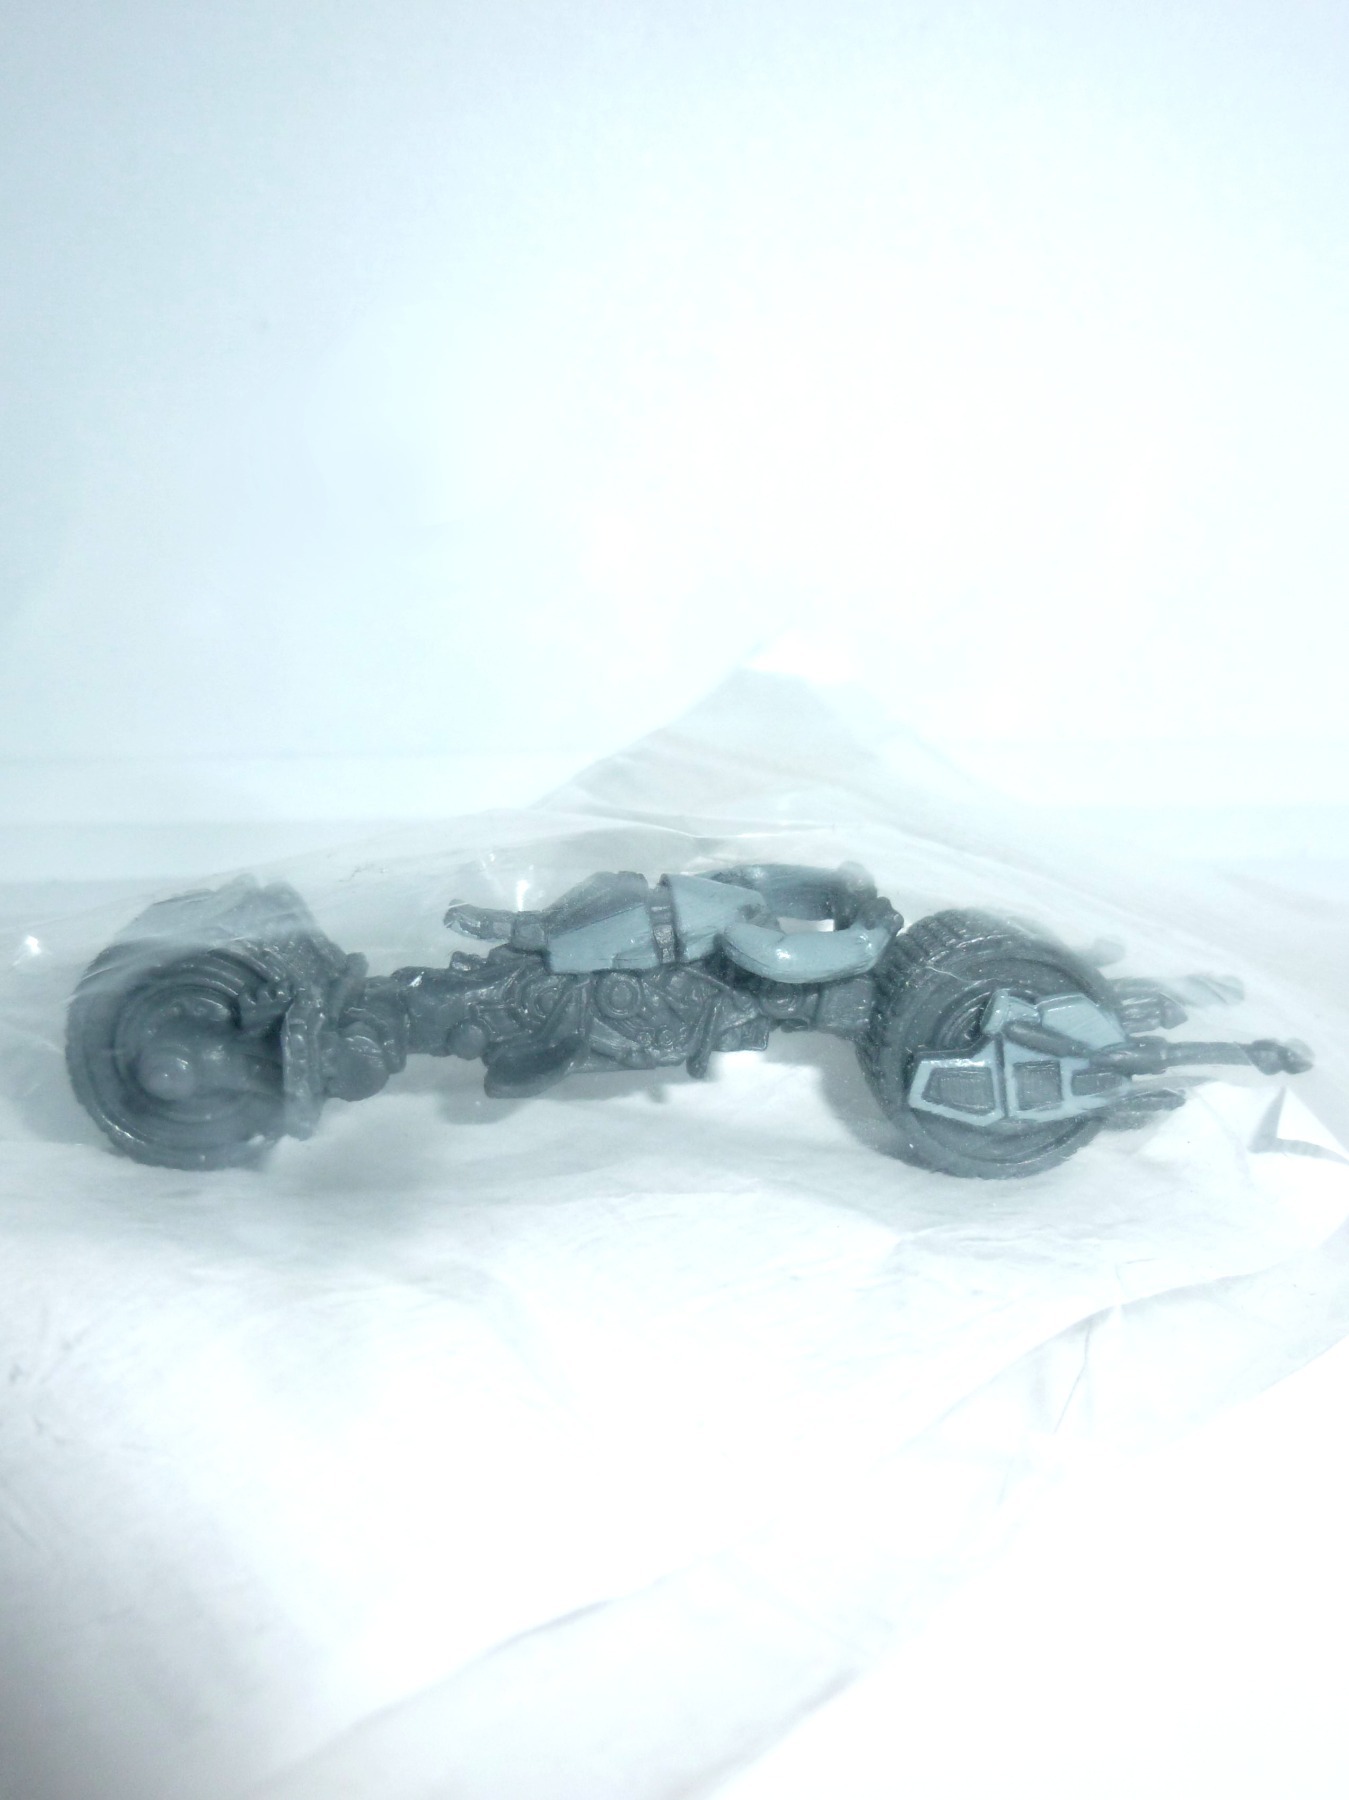 Batman Motorcycle Model 2008